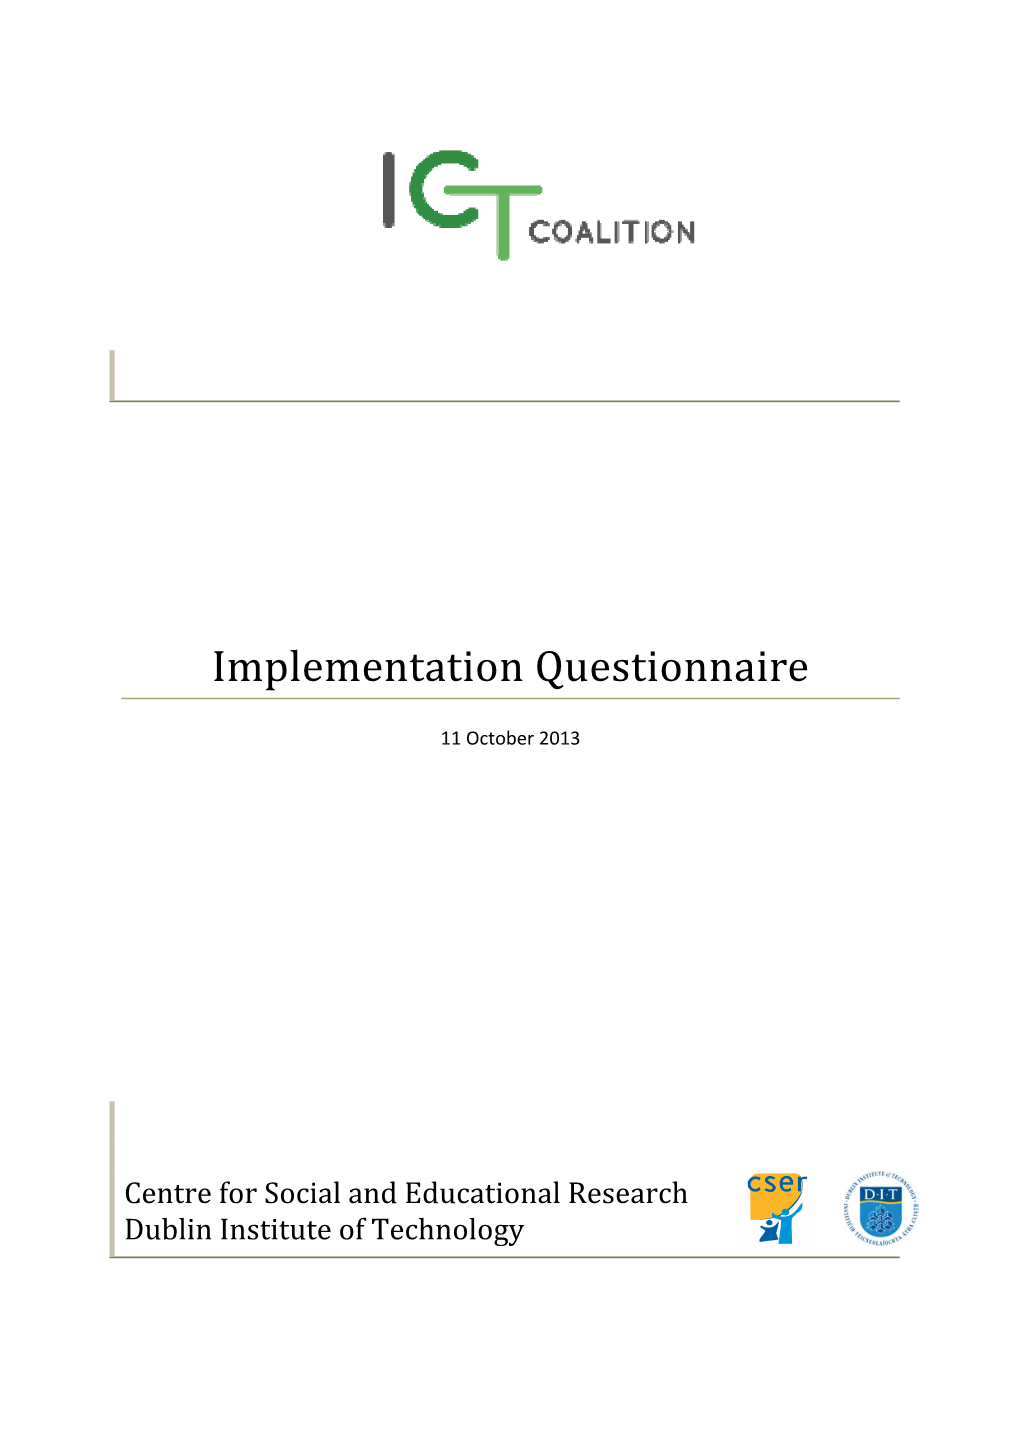 2014 ICT Principle Implementation Report